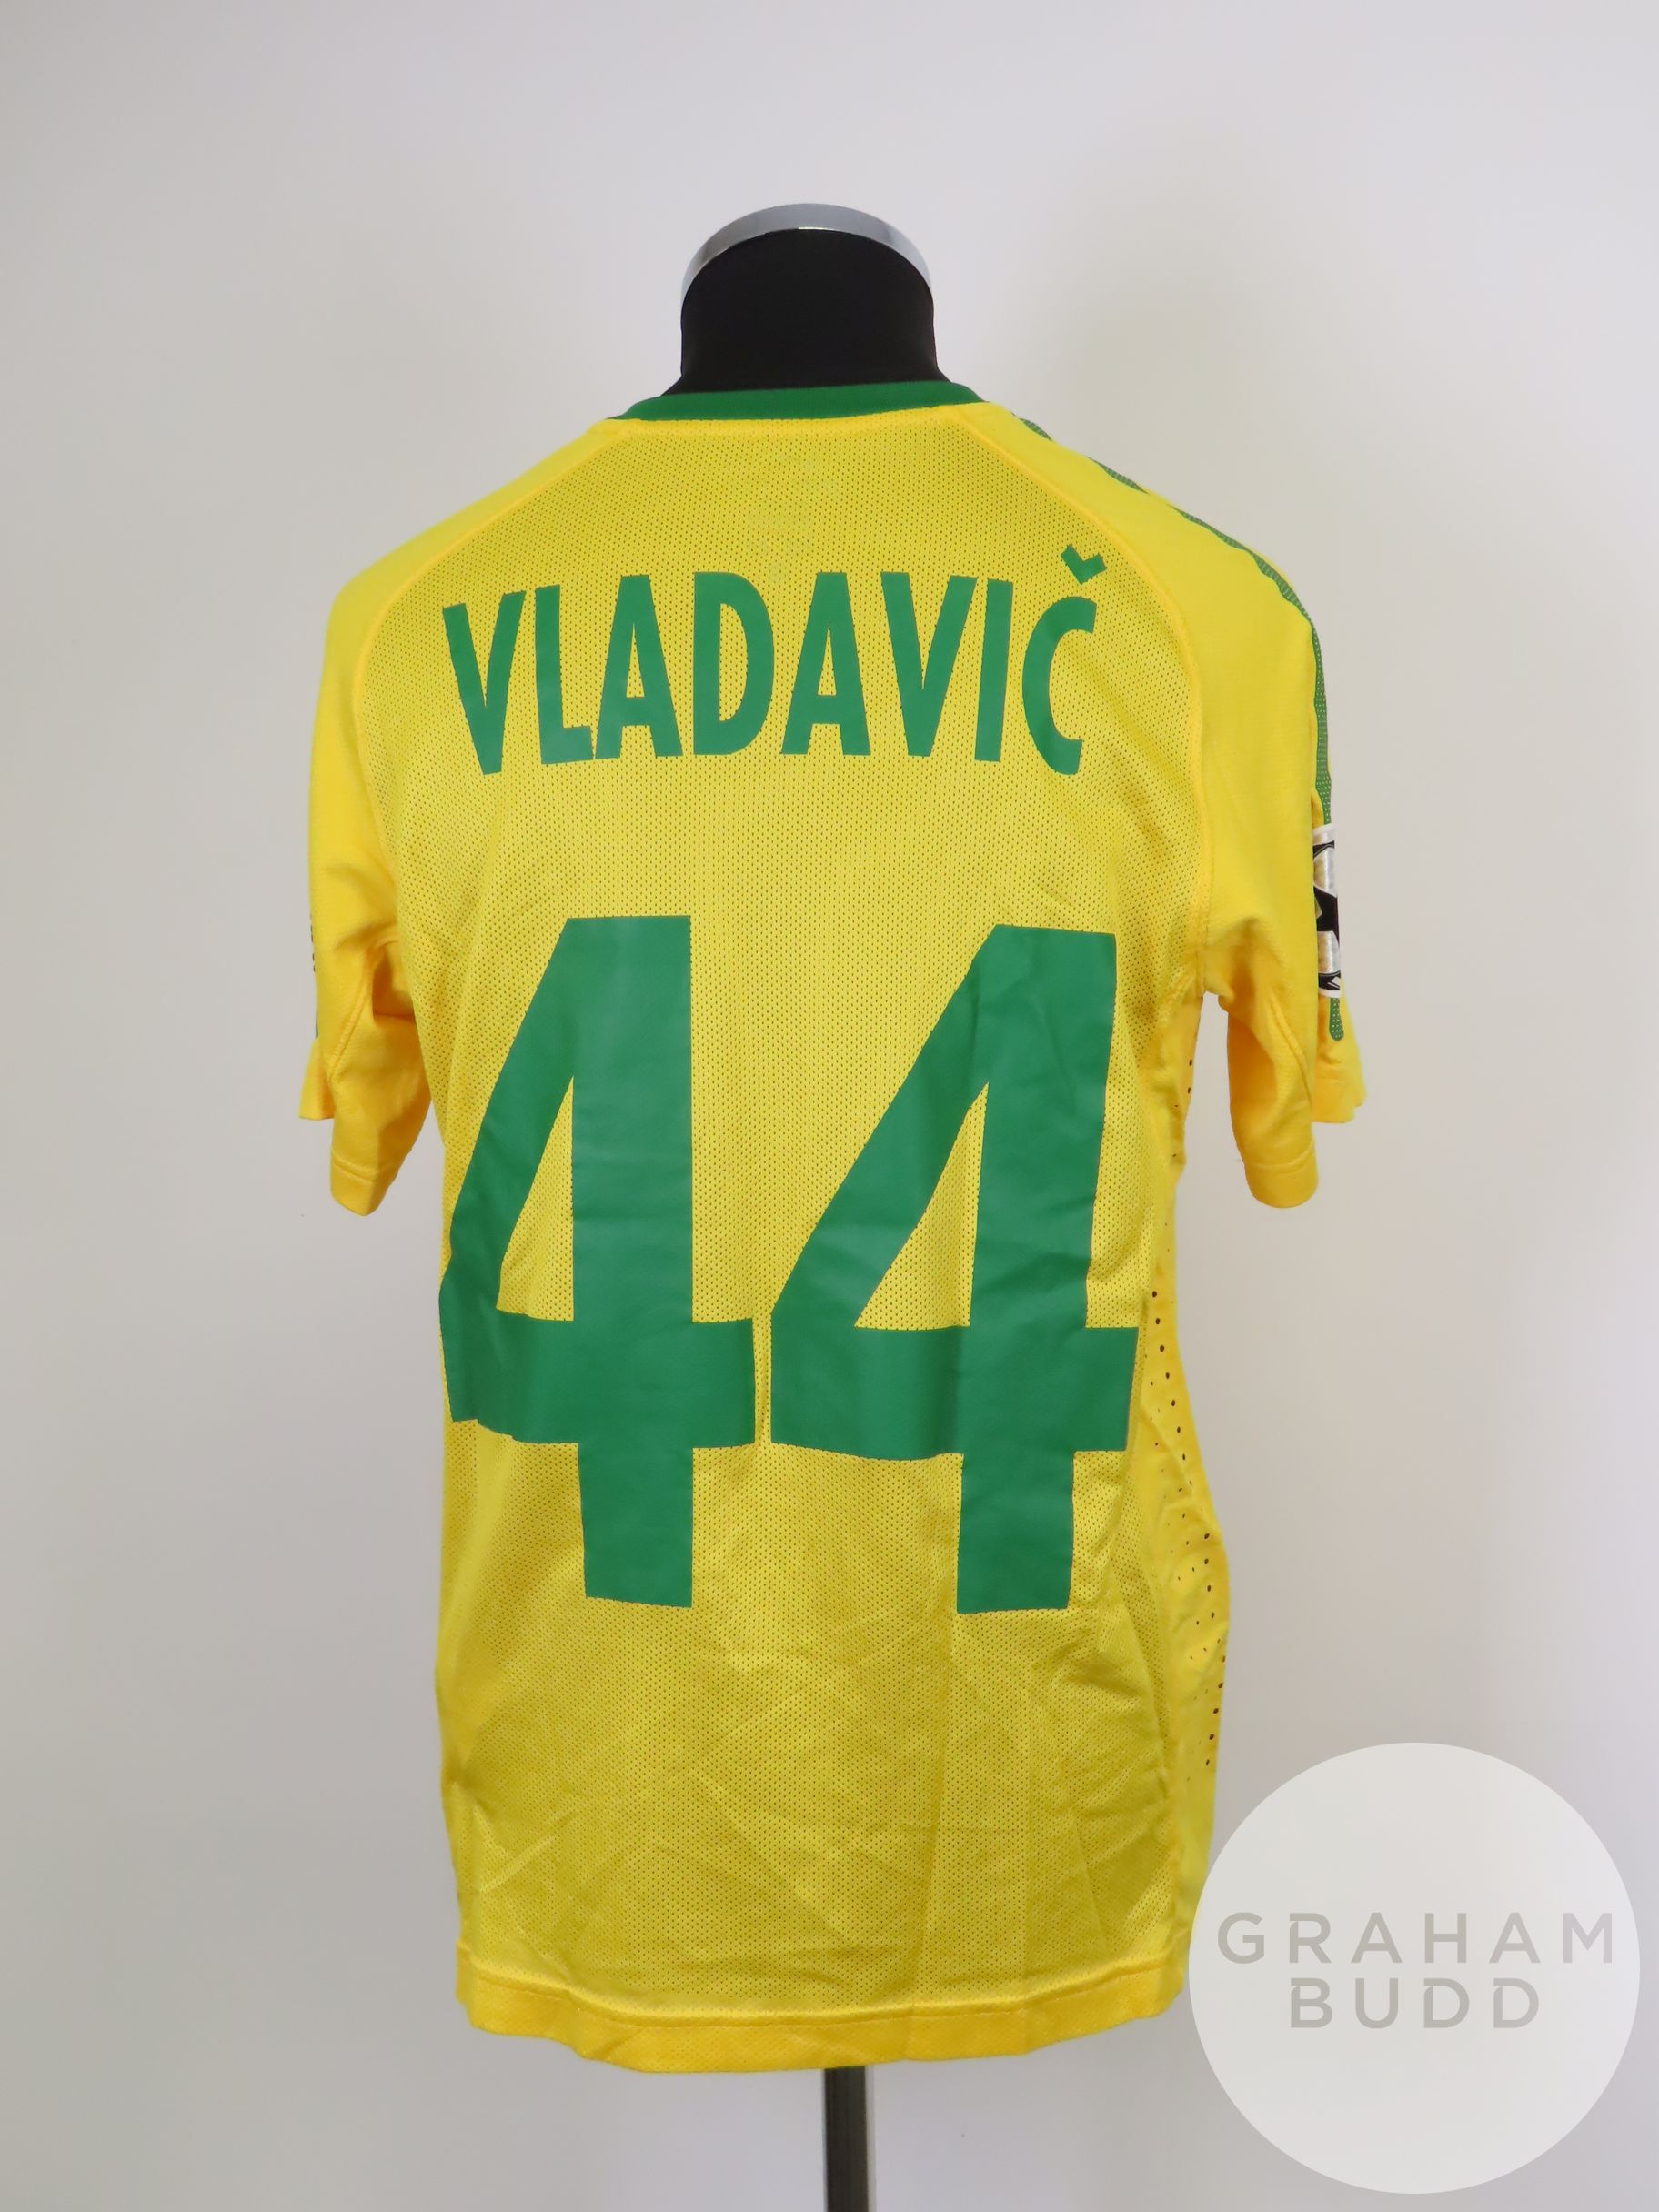 Admir Vladhavic yellow and green No.44 MSK Zilina match worn short-sleeved shirt, 2010-11 - Image 2 of 2